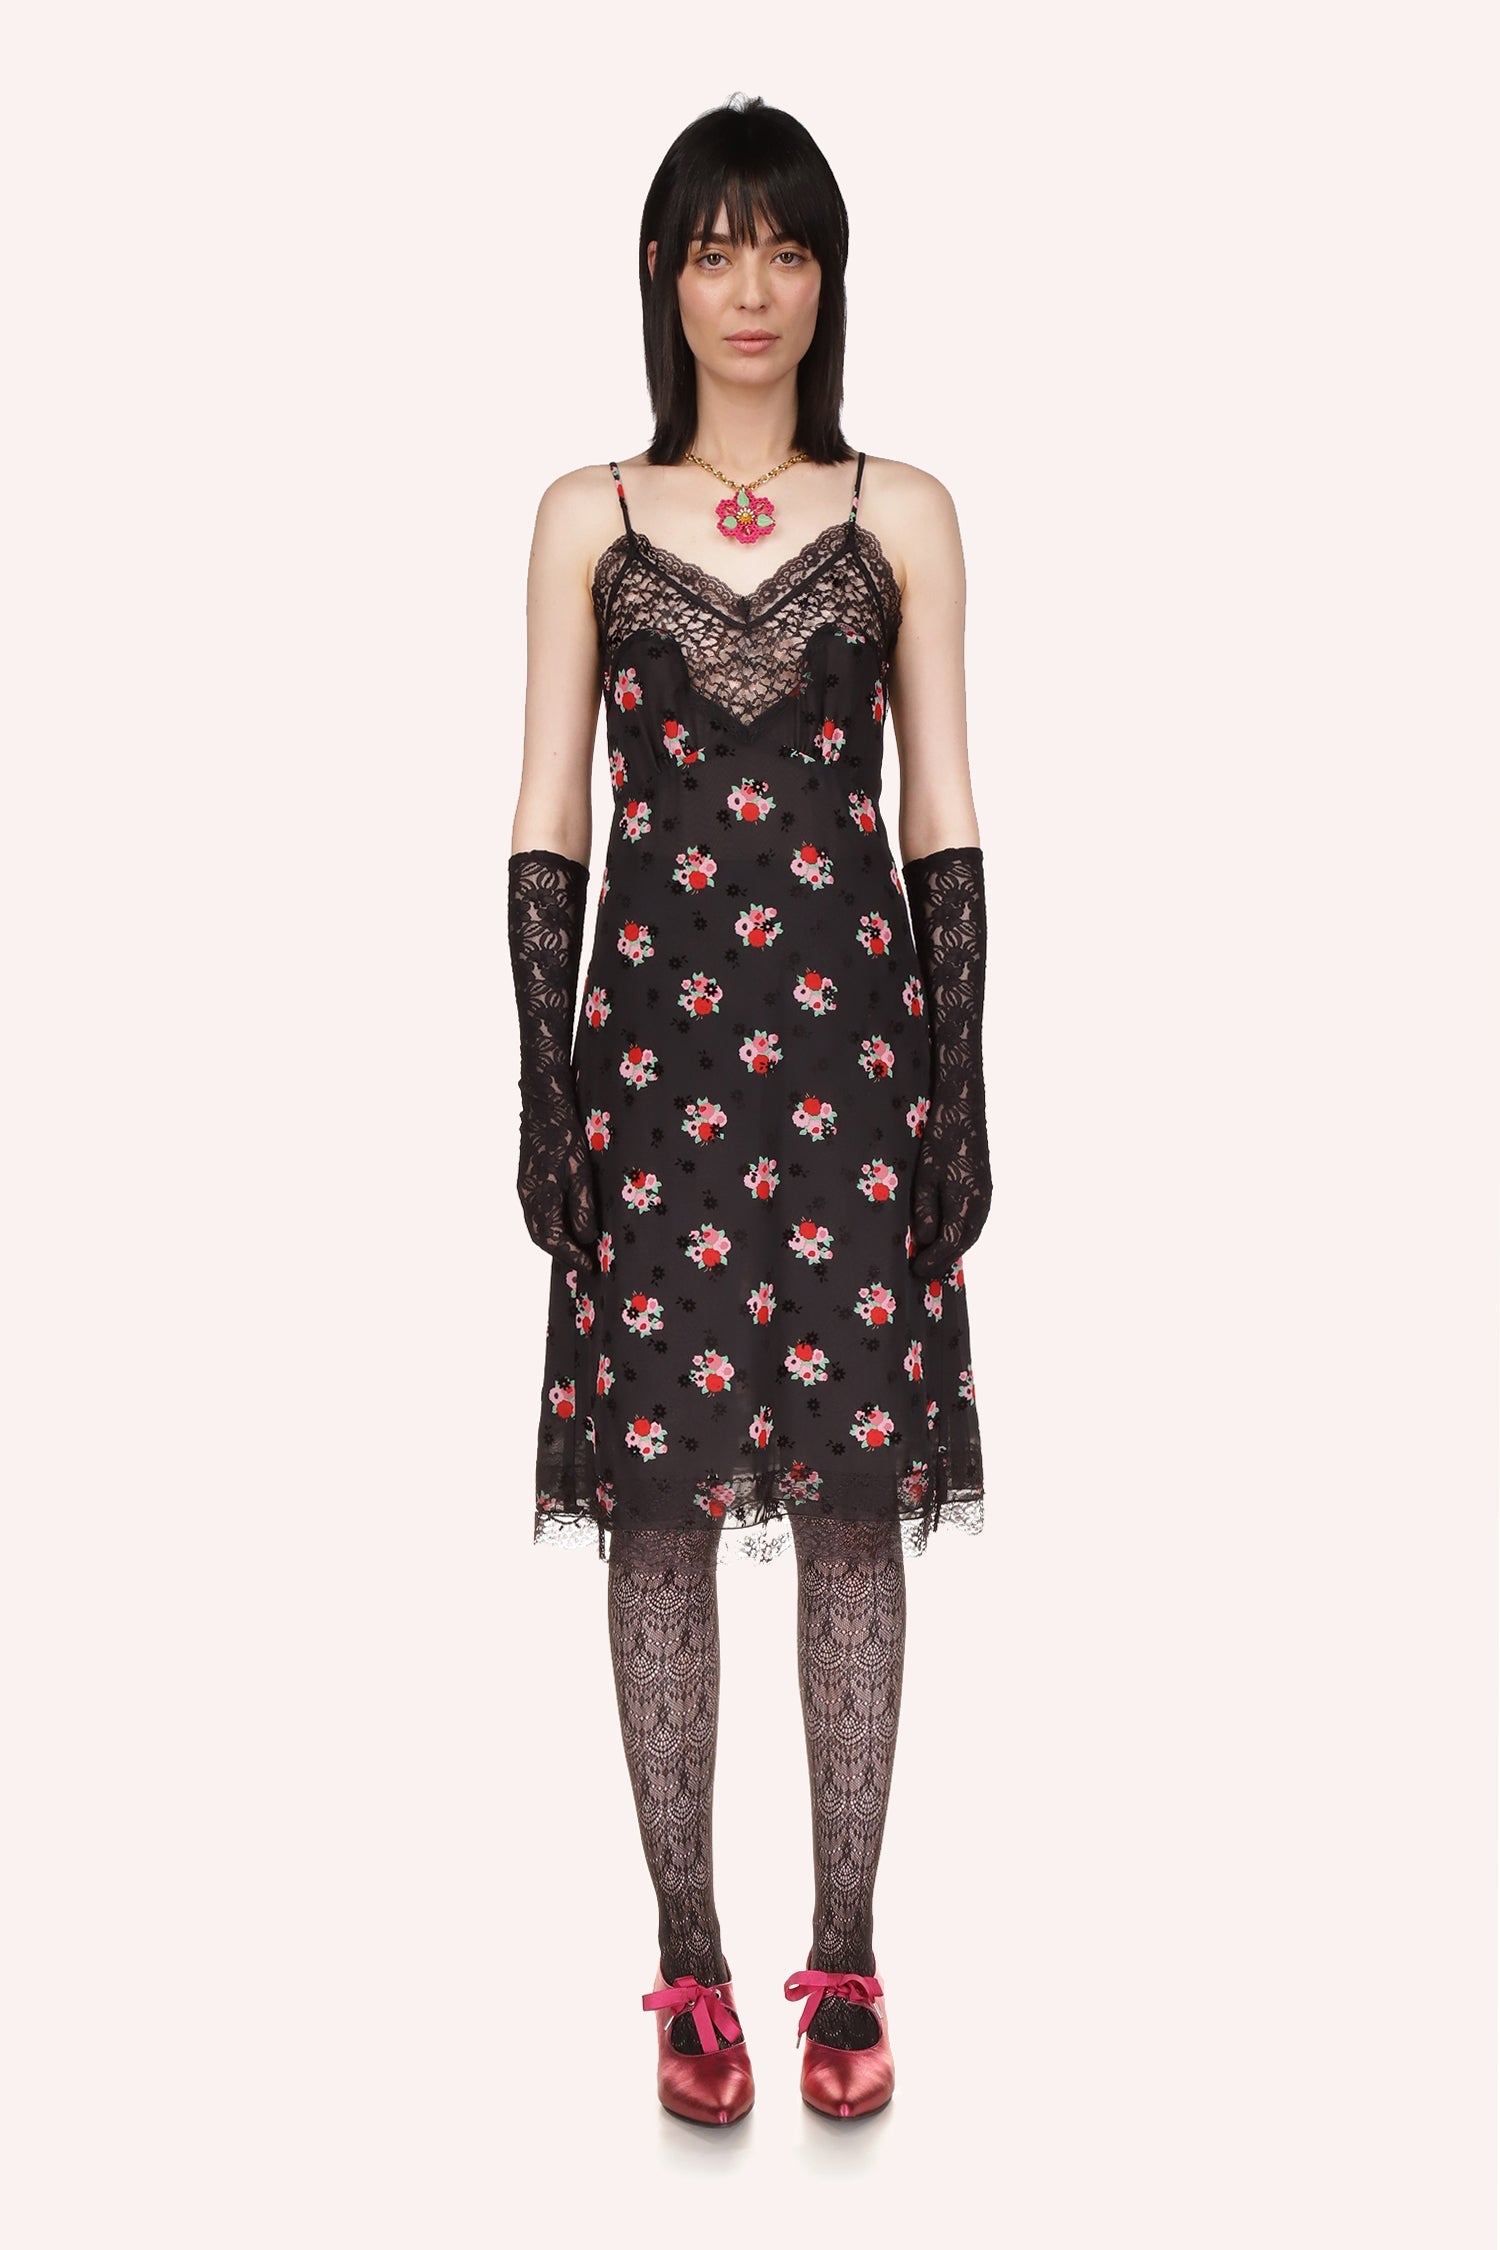 Black Dress, Rosie Posie pattern, V-shape, black lace collar and strait at bottom, sleeveless, 2-straps